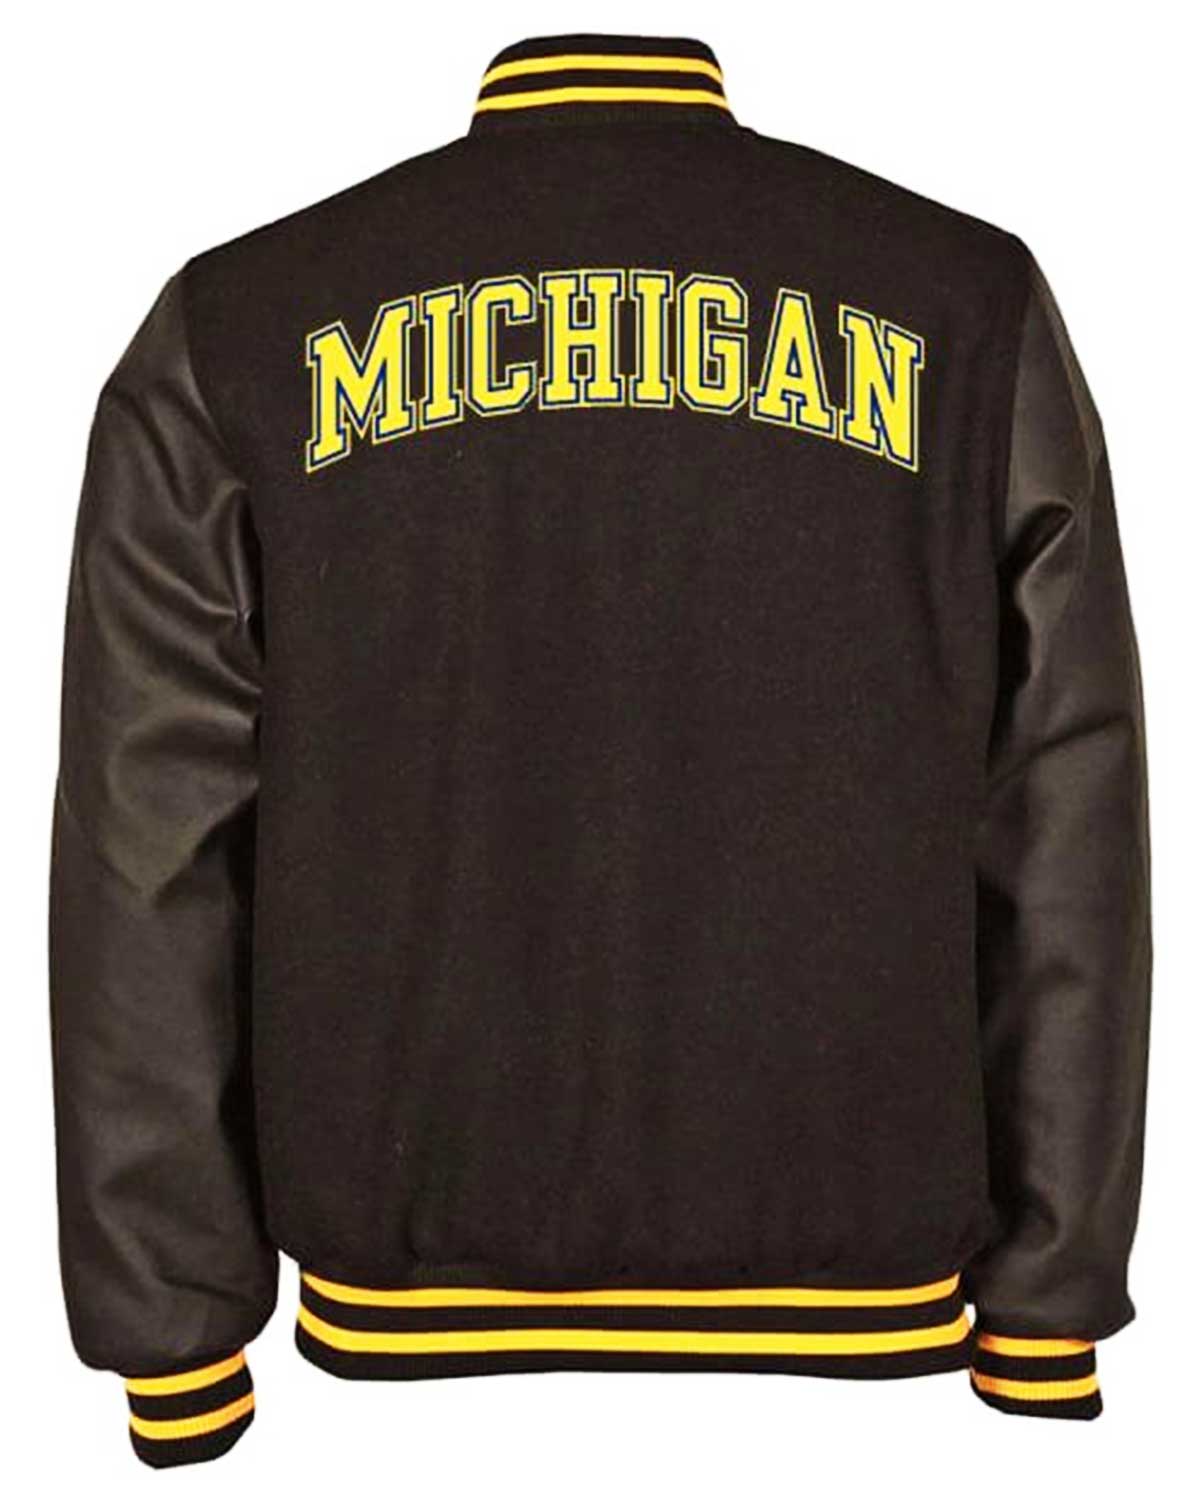 Elite Men’s Michigan Letterman Jacket